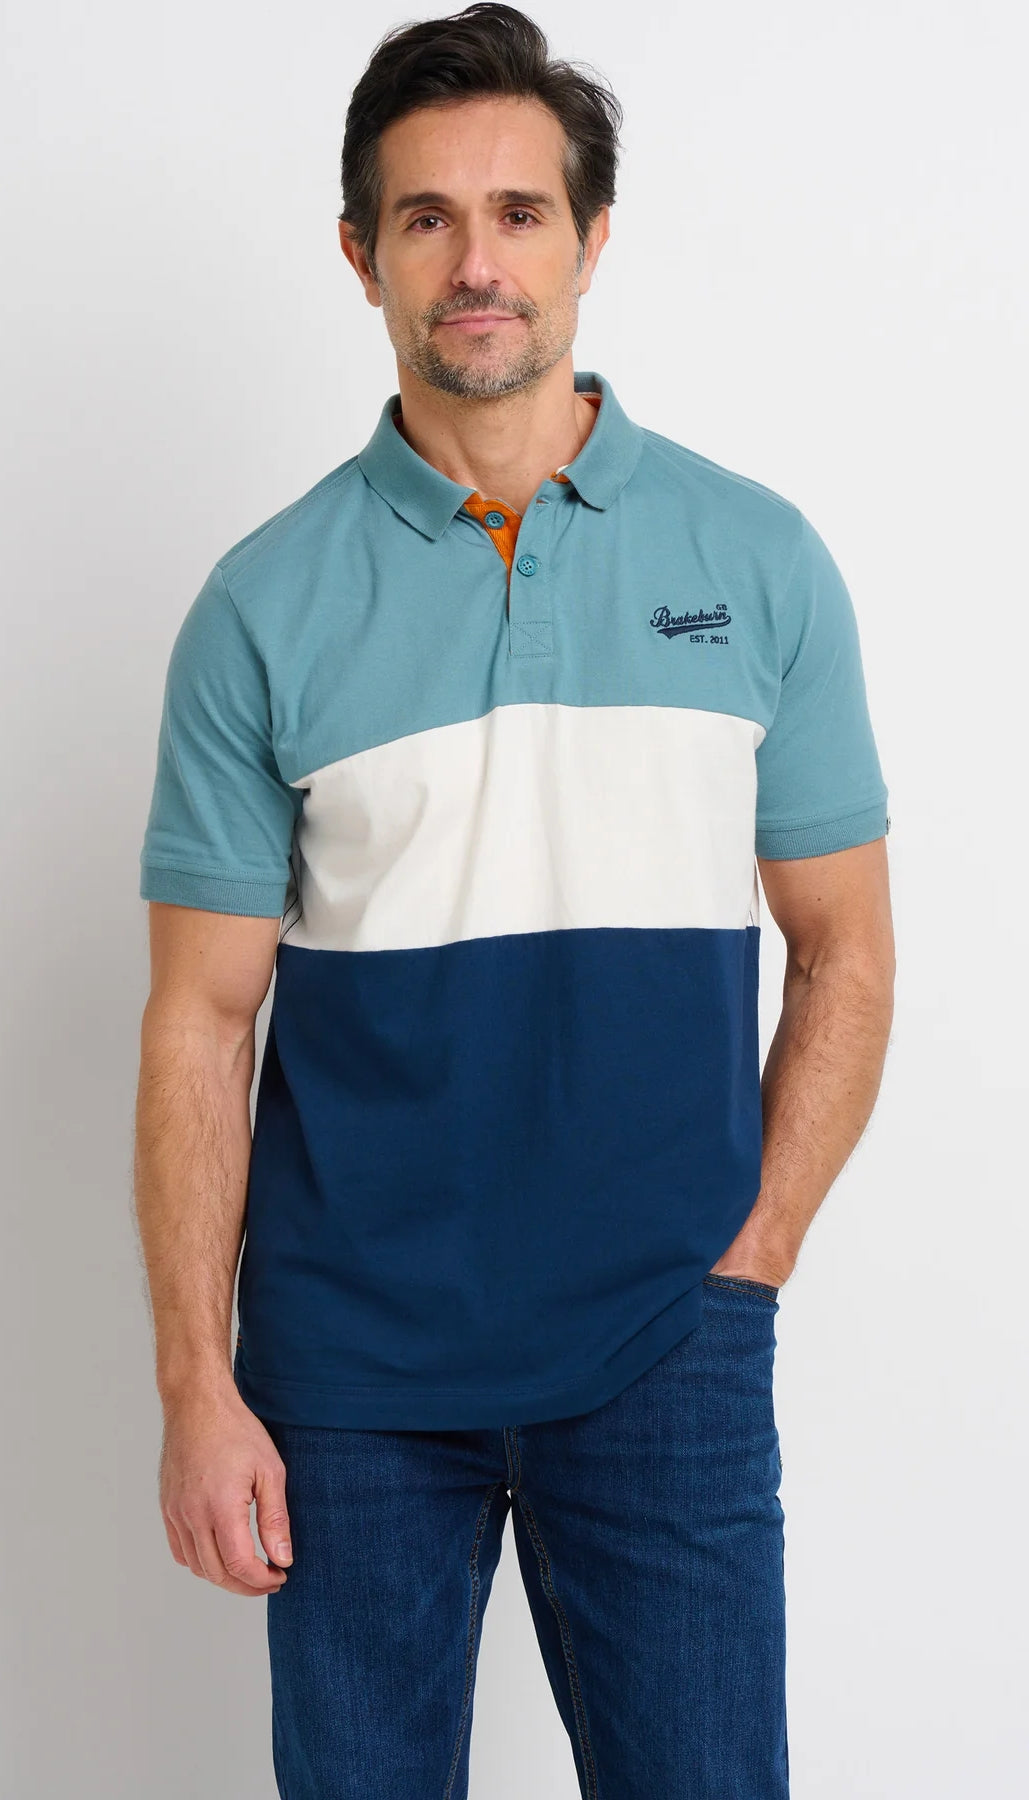 Men's colour block style short sleeve polo shirt from Brakeburn in blue.